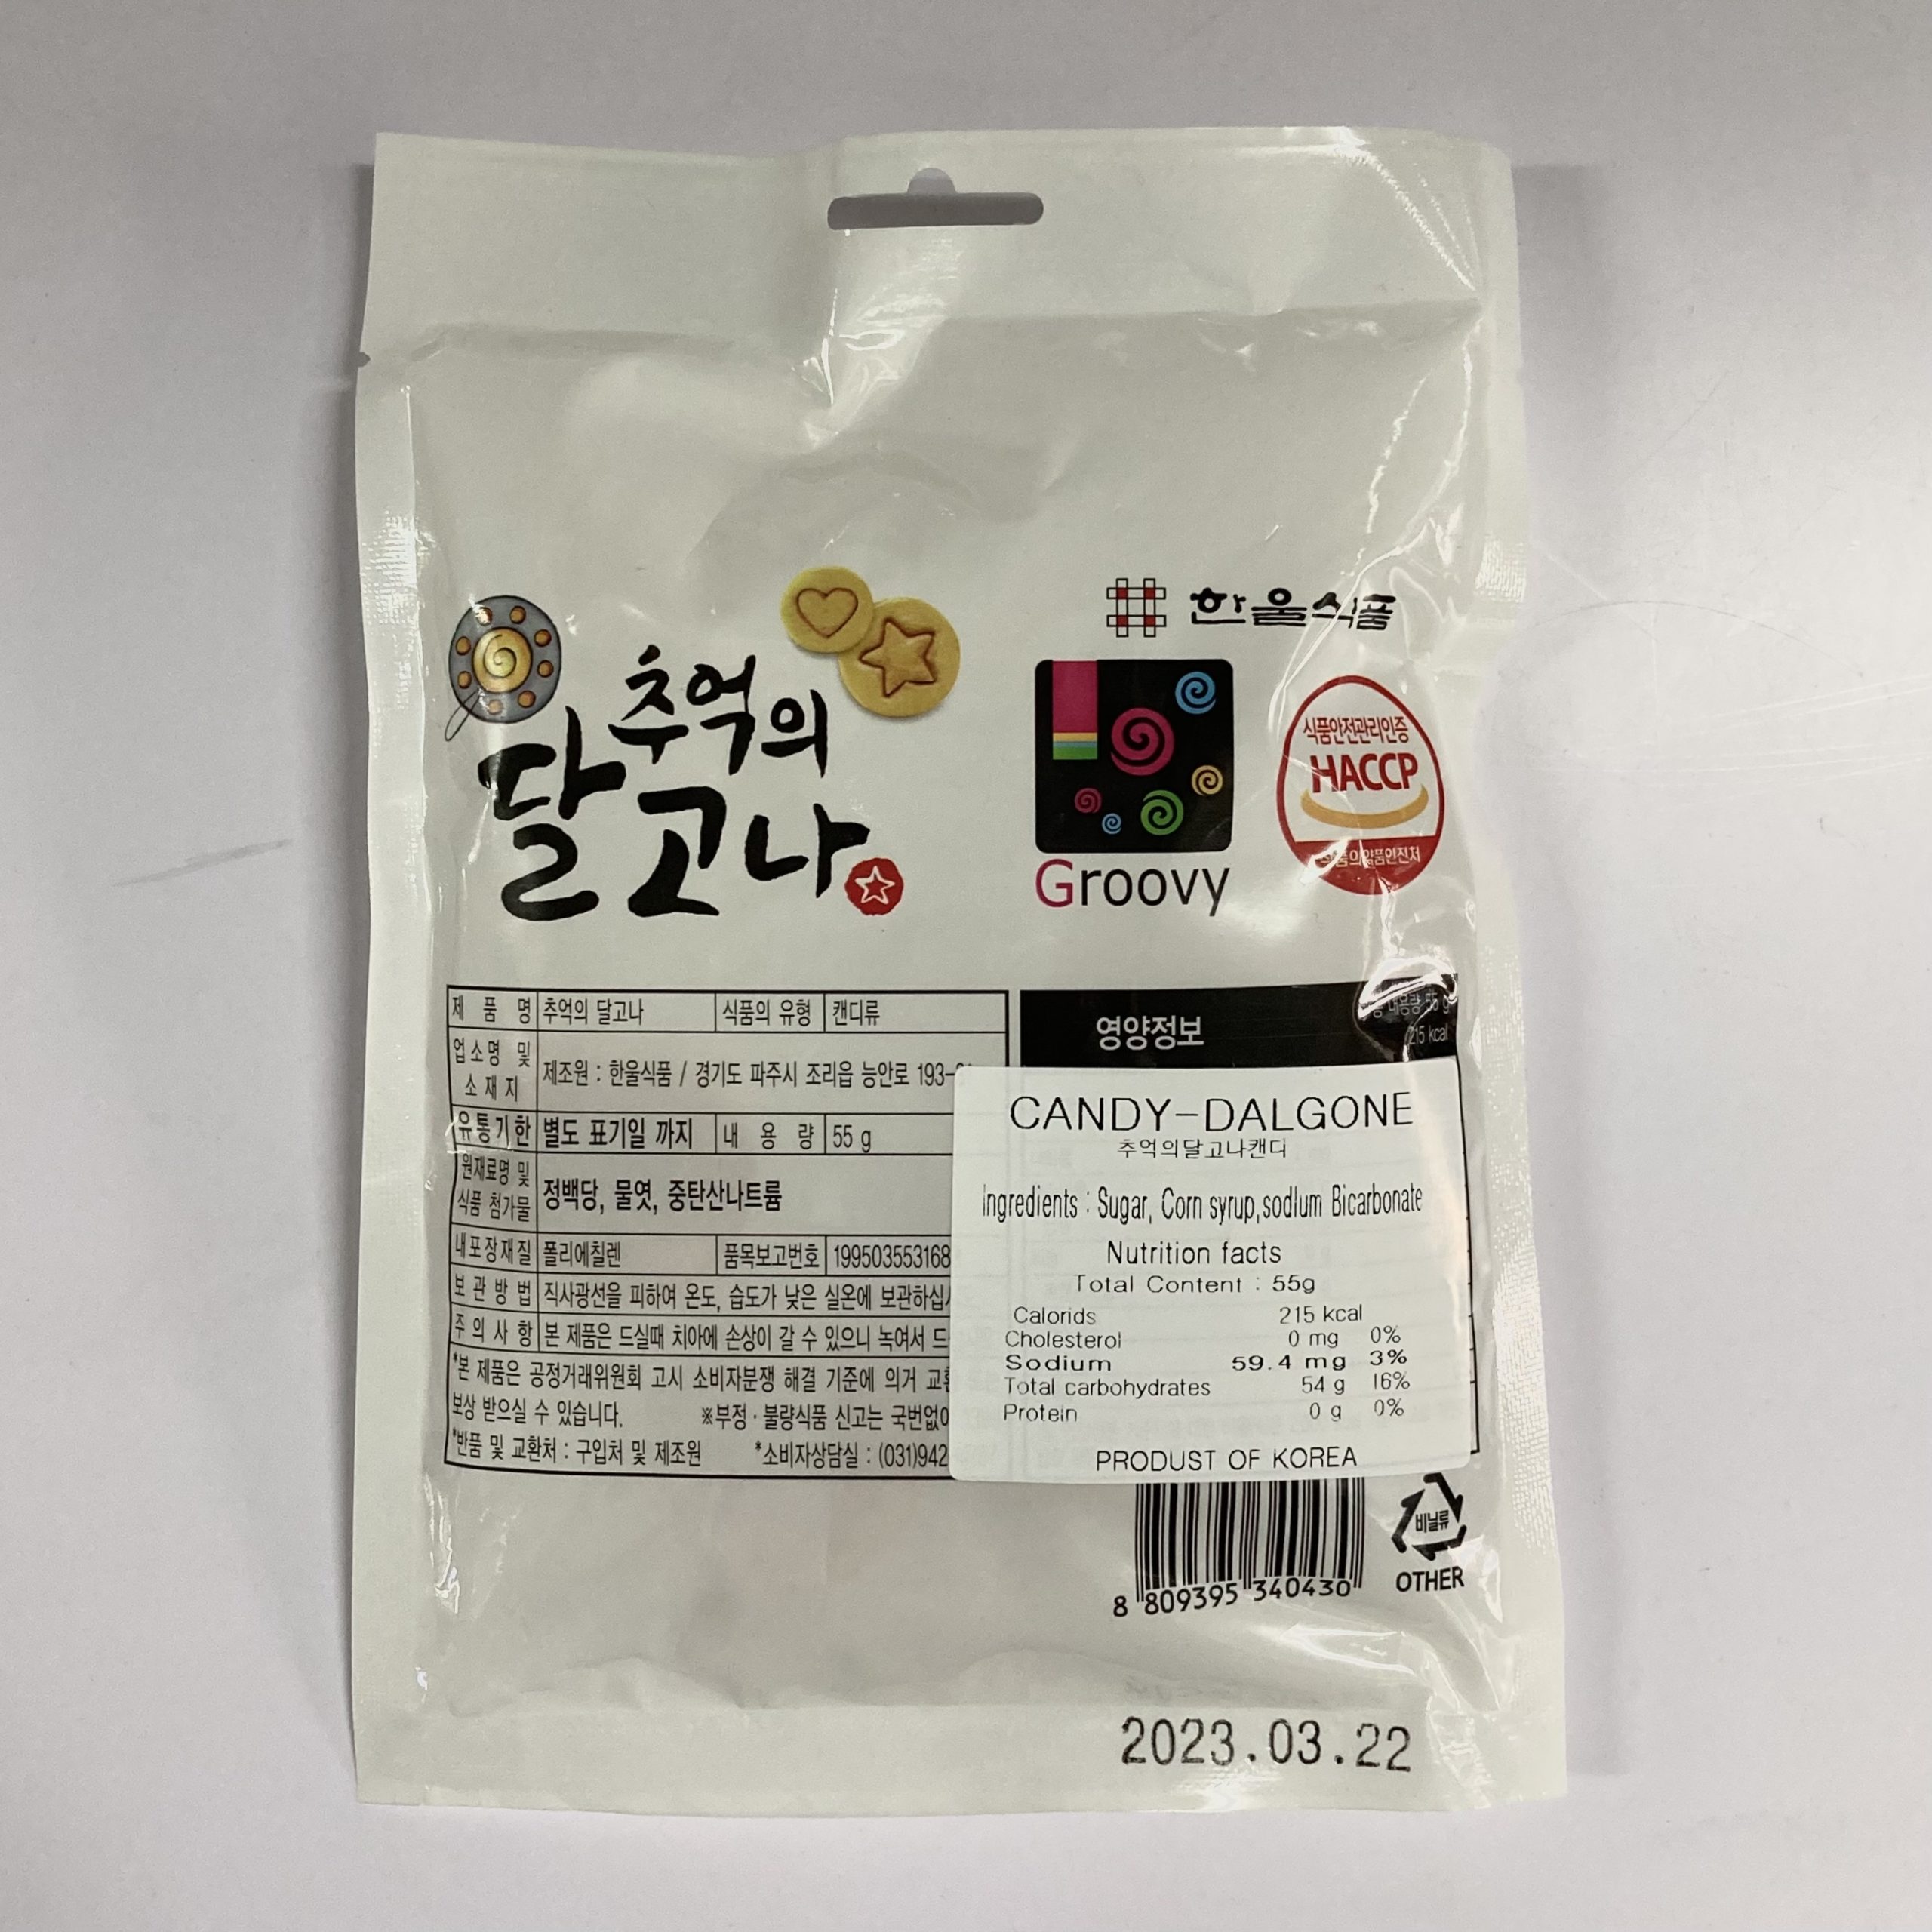 韓國食品-[Hanul] 回憶的烤糖餅 椪糖 Dalgona 55g